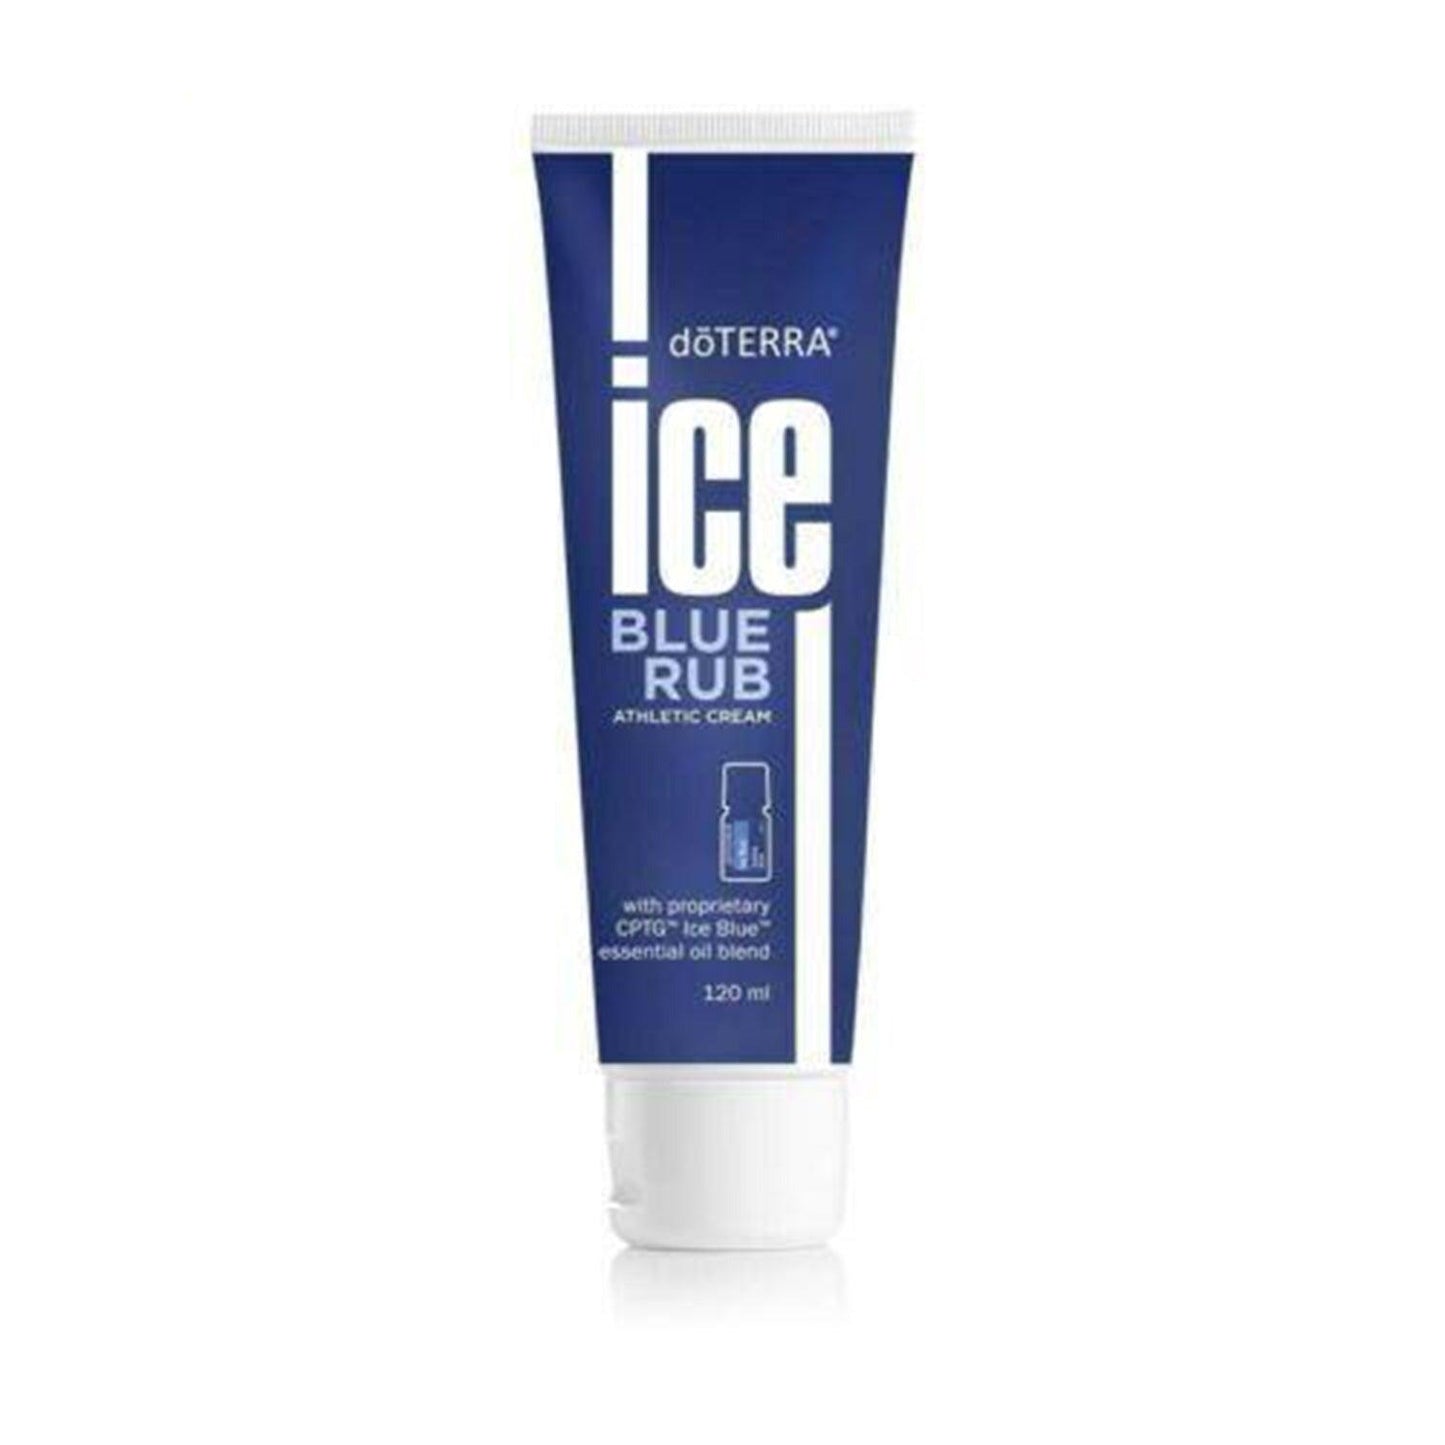 dōTERRA Ice Blue® Rub 120ml Sports Cream - Anjelstore 